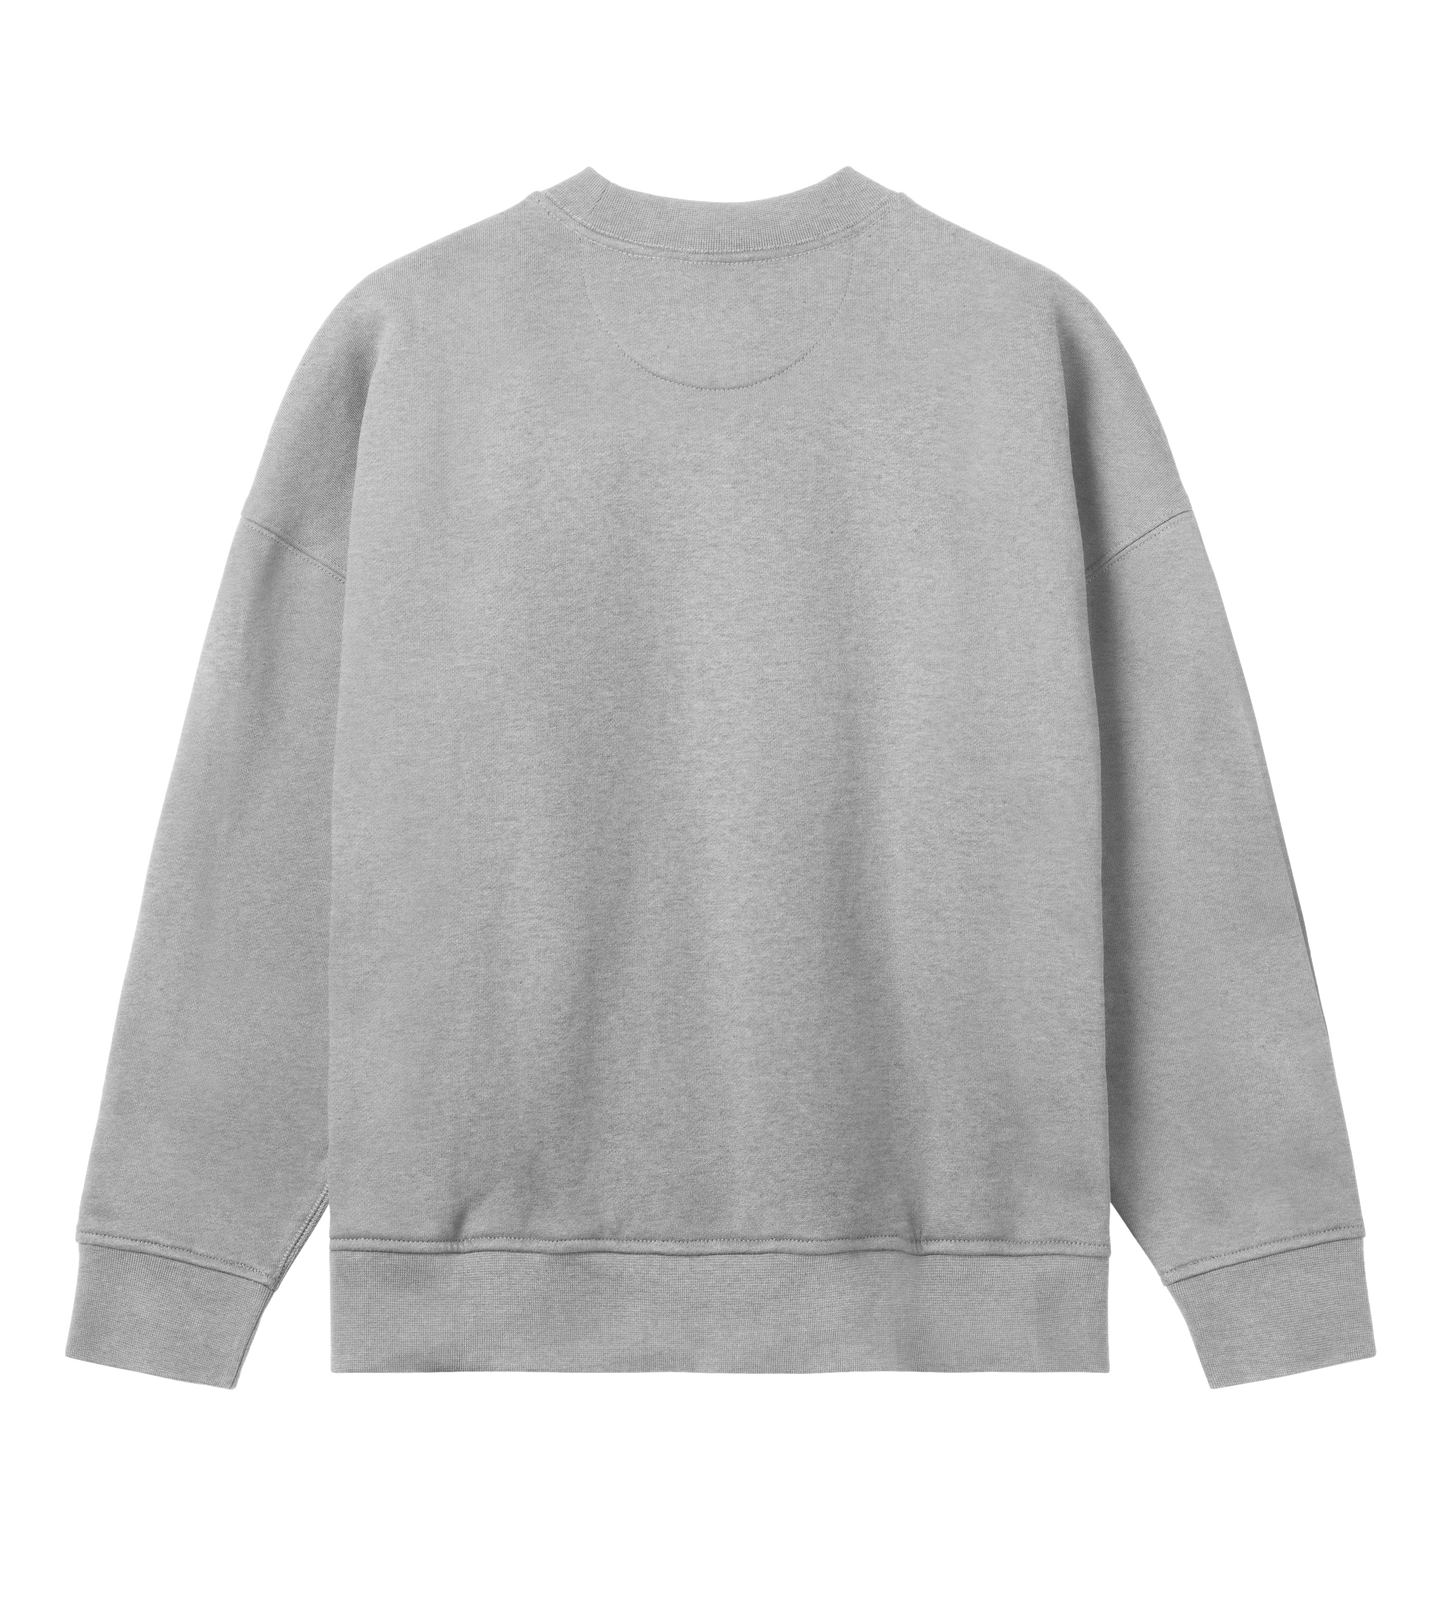 'Peace Out' Women's Oversized Sweater - Grey Melange